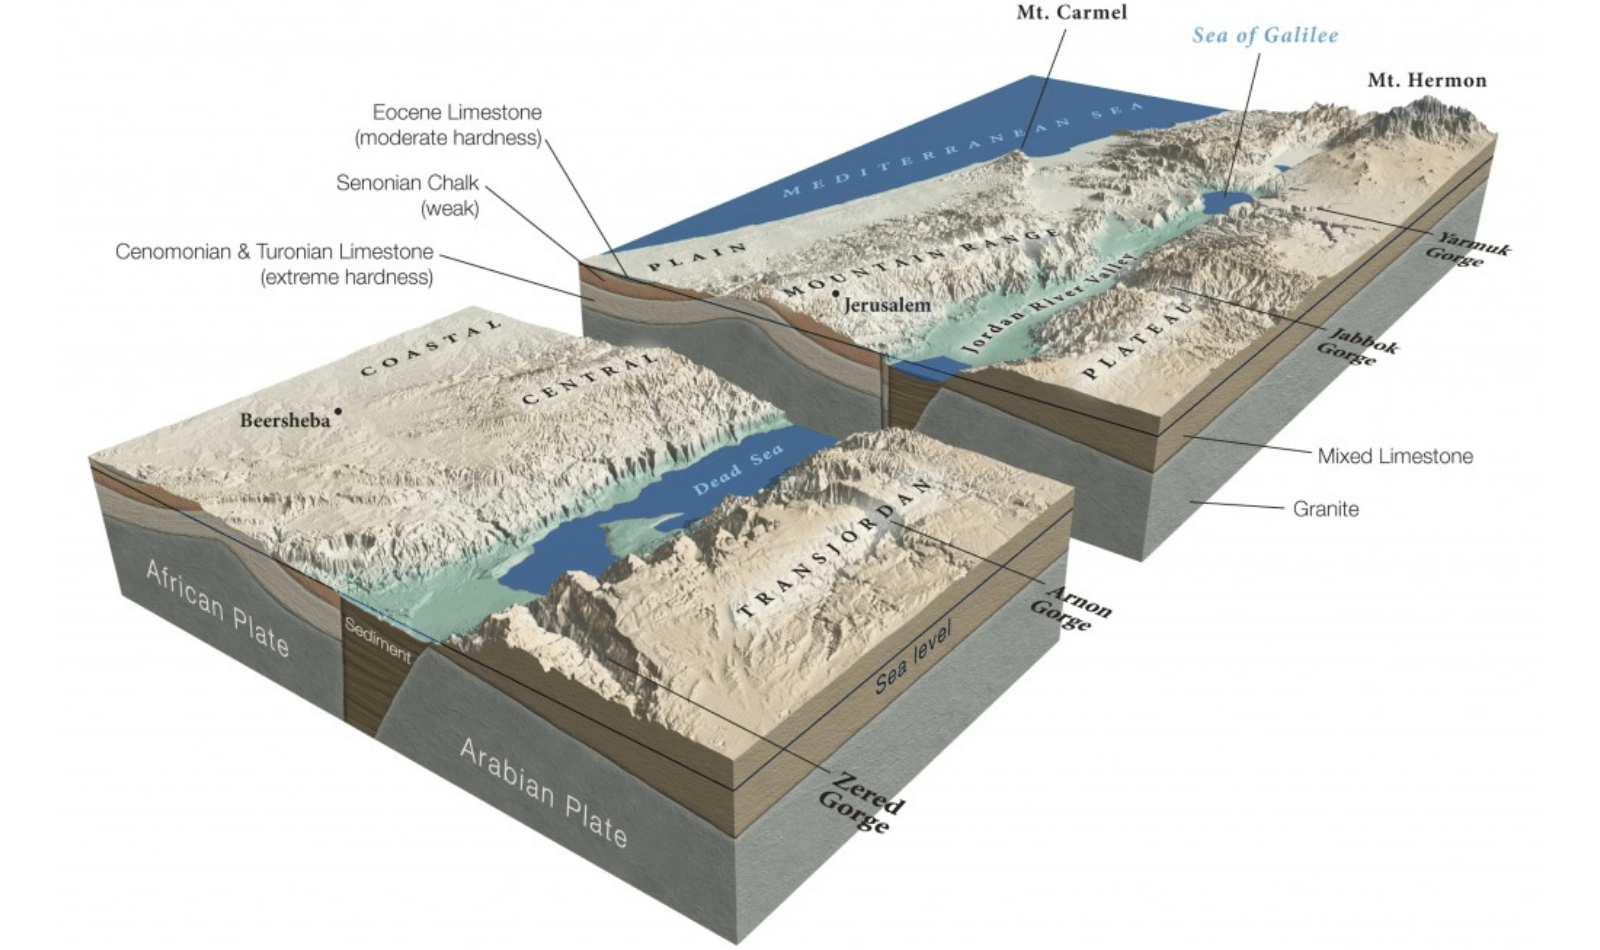 Schematic of the Dead Sea Fault (Source: https://thenaturalhistorian.com)